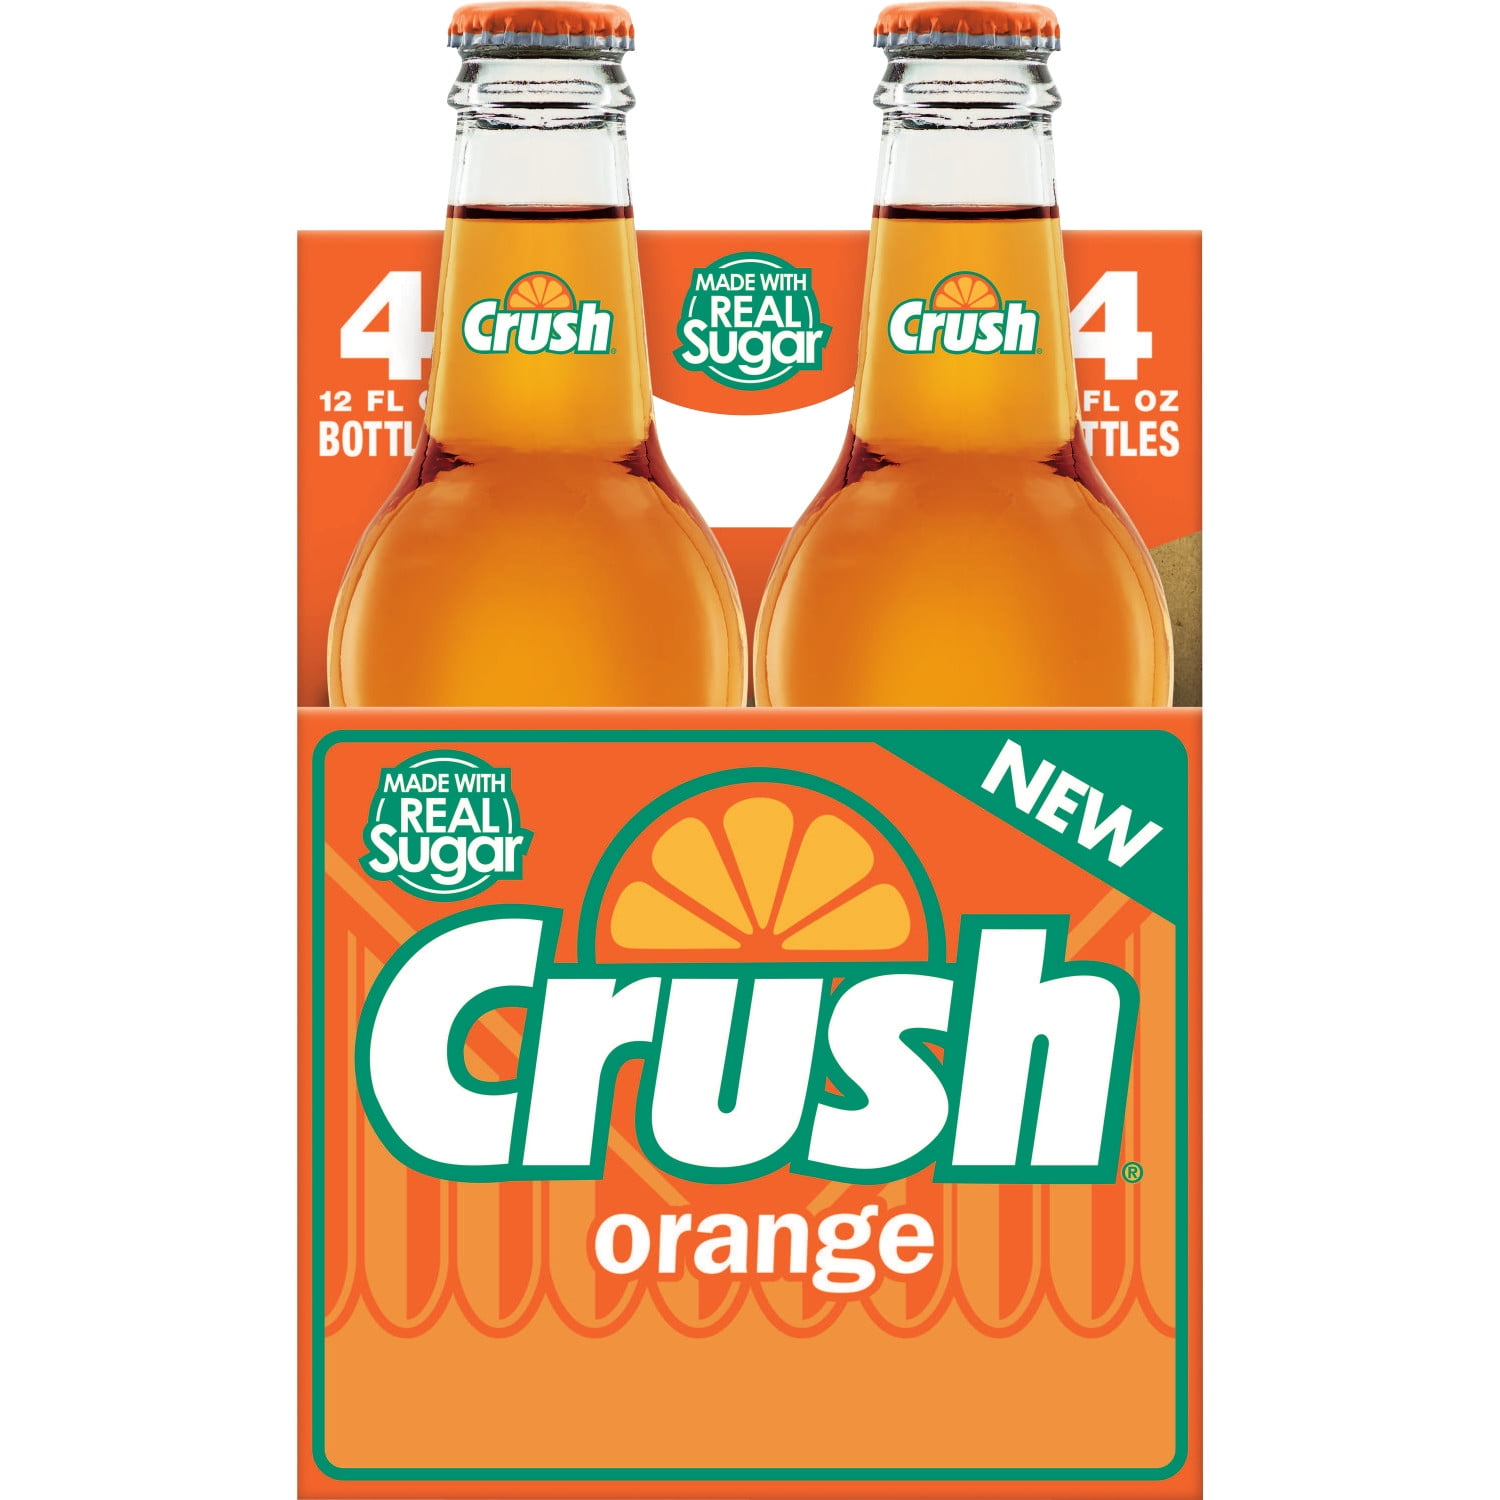 Orange crush bottle lowest prices.